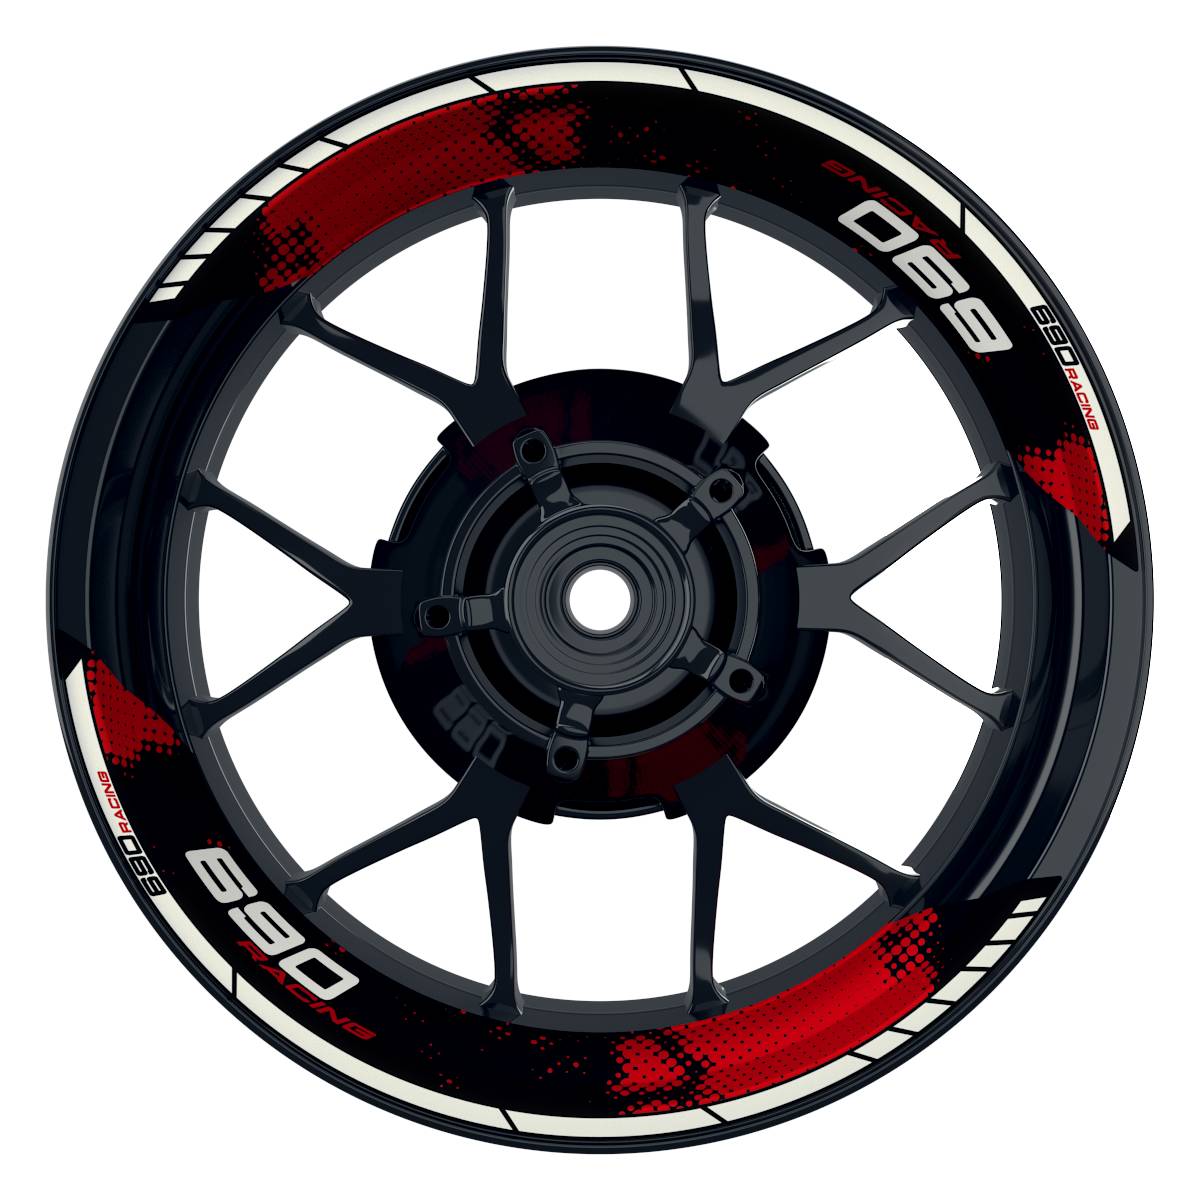 KTM Racing 690 Dots schwarz rot Frontansicht